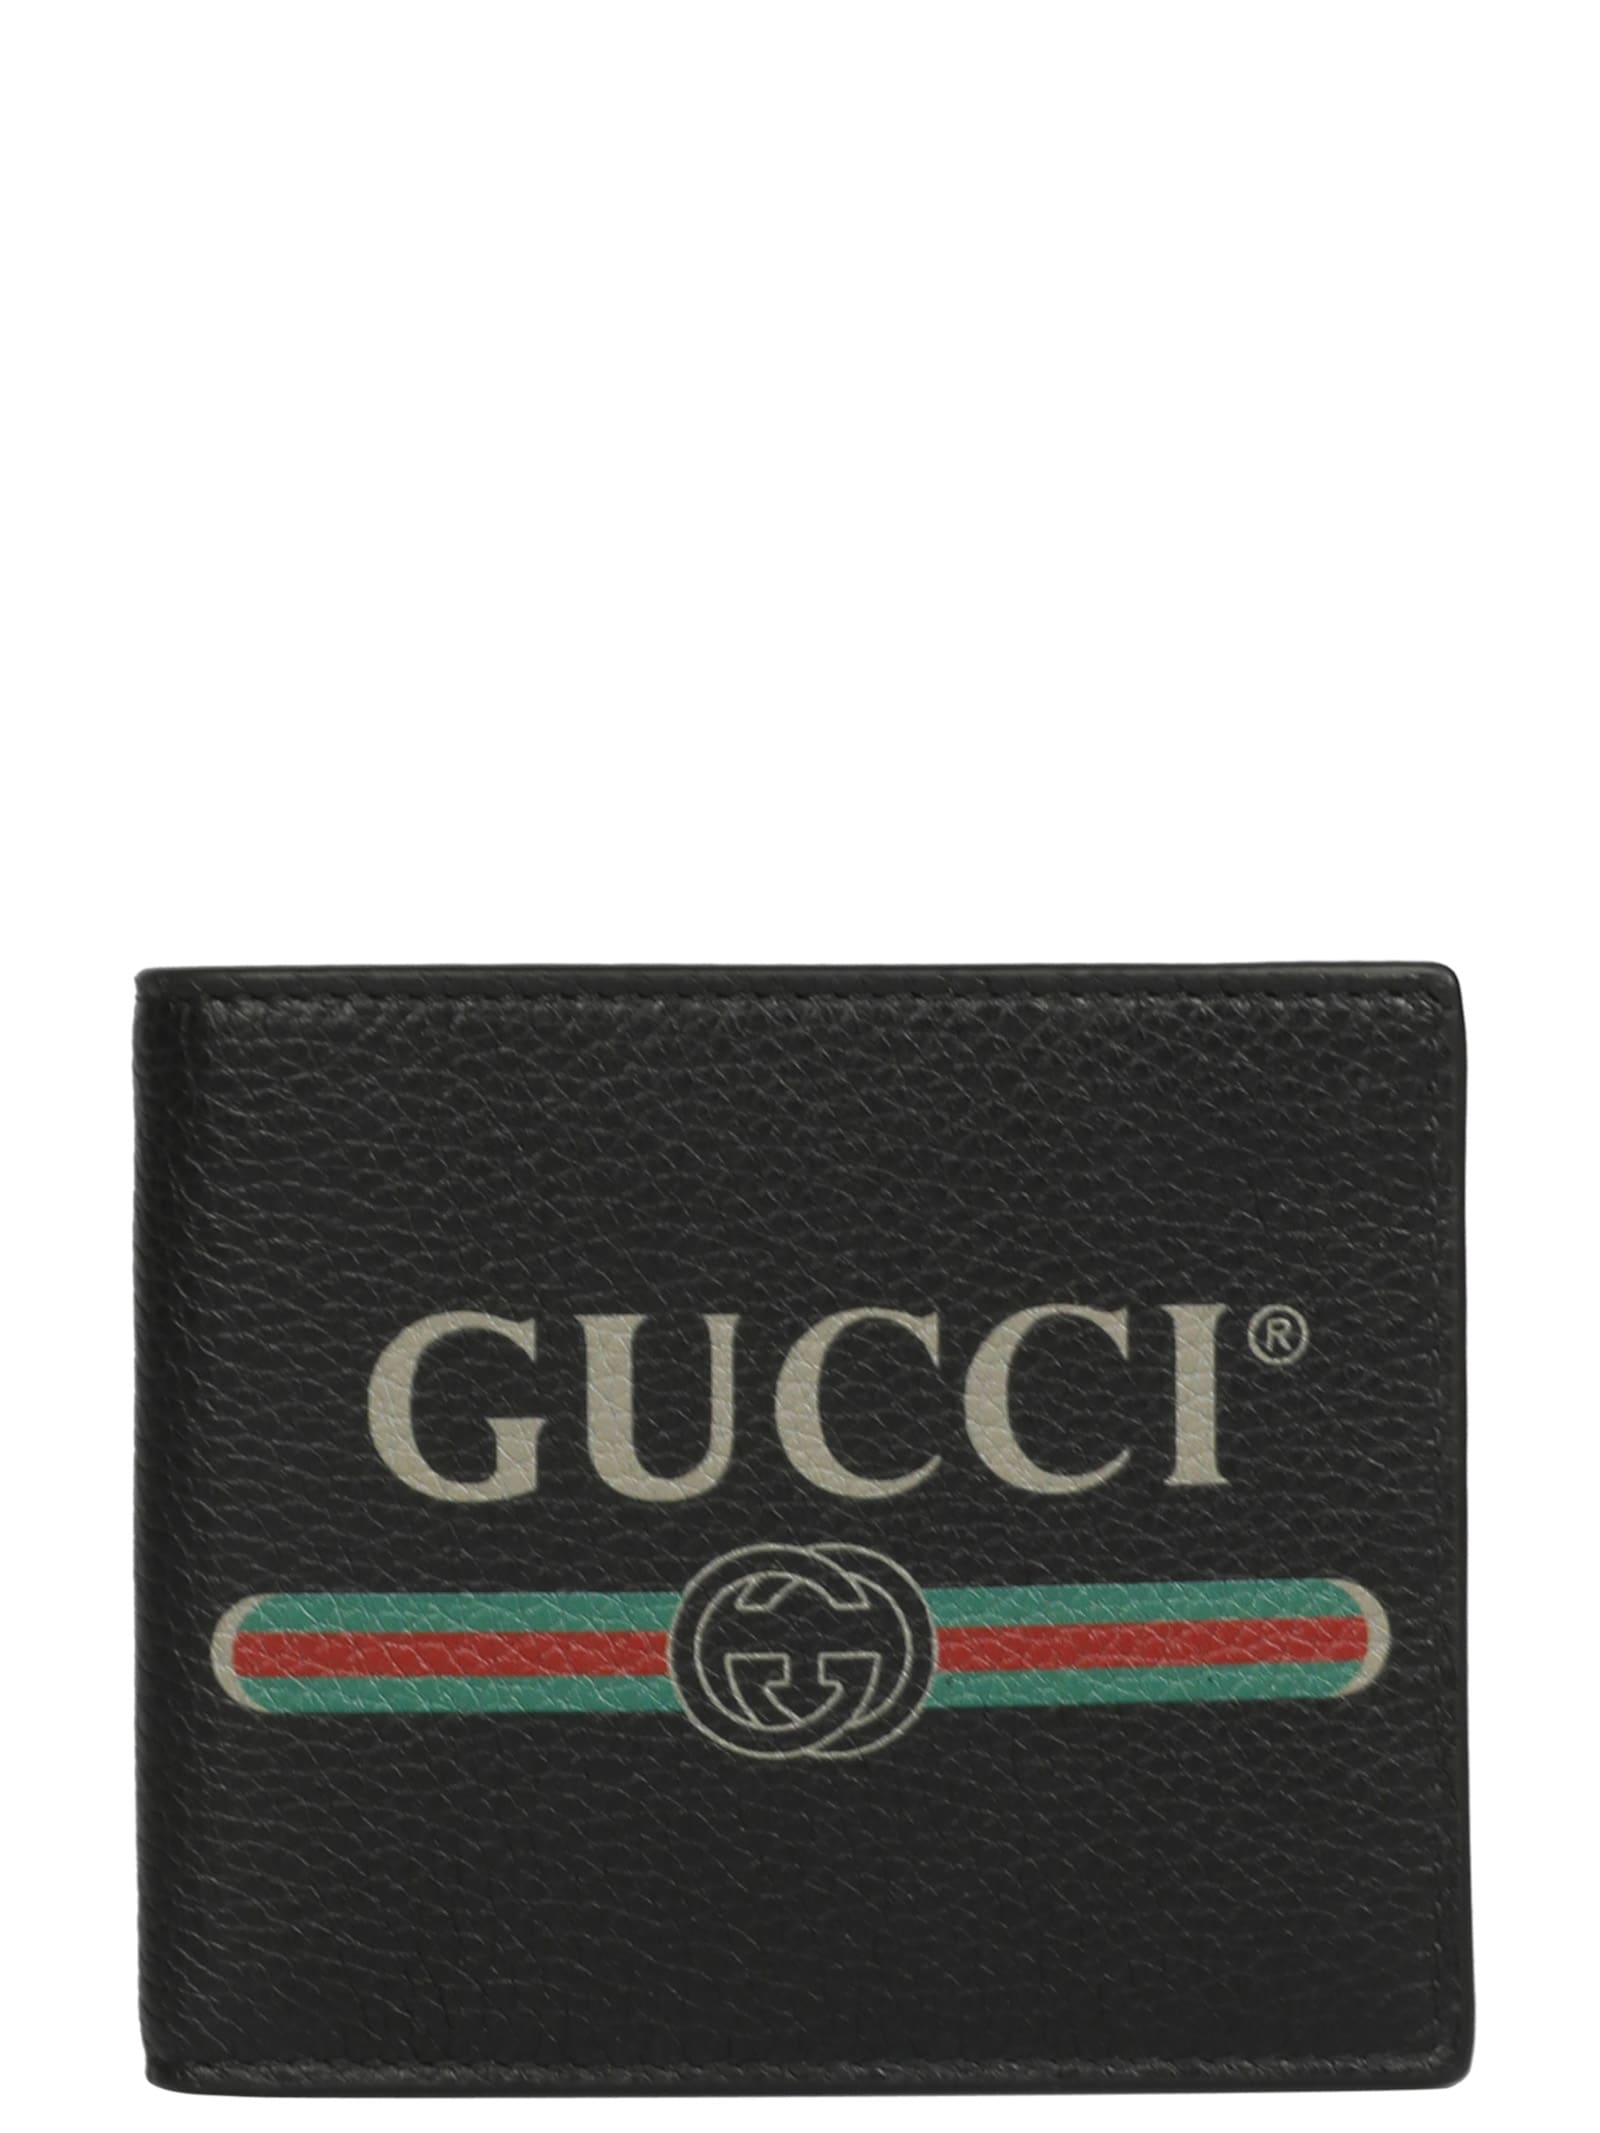 gucci wallet sale